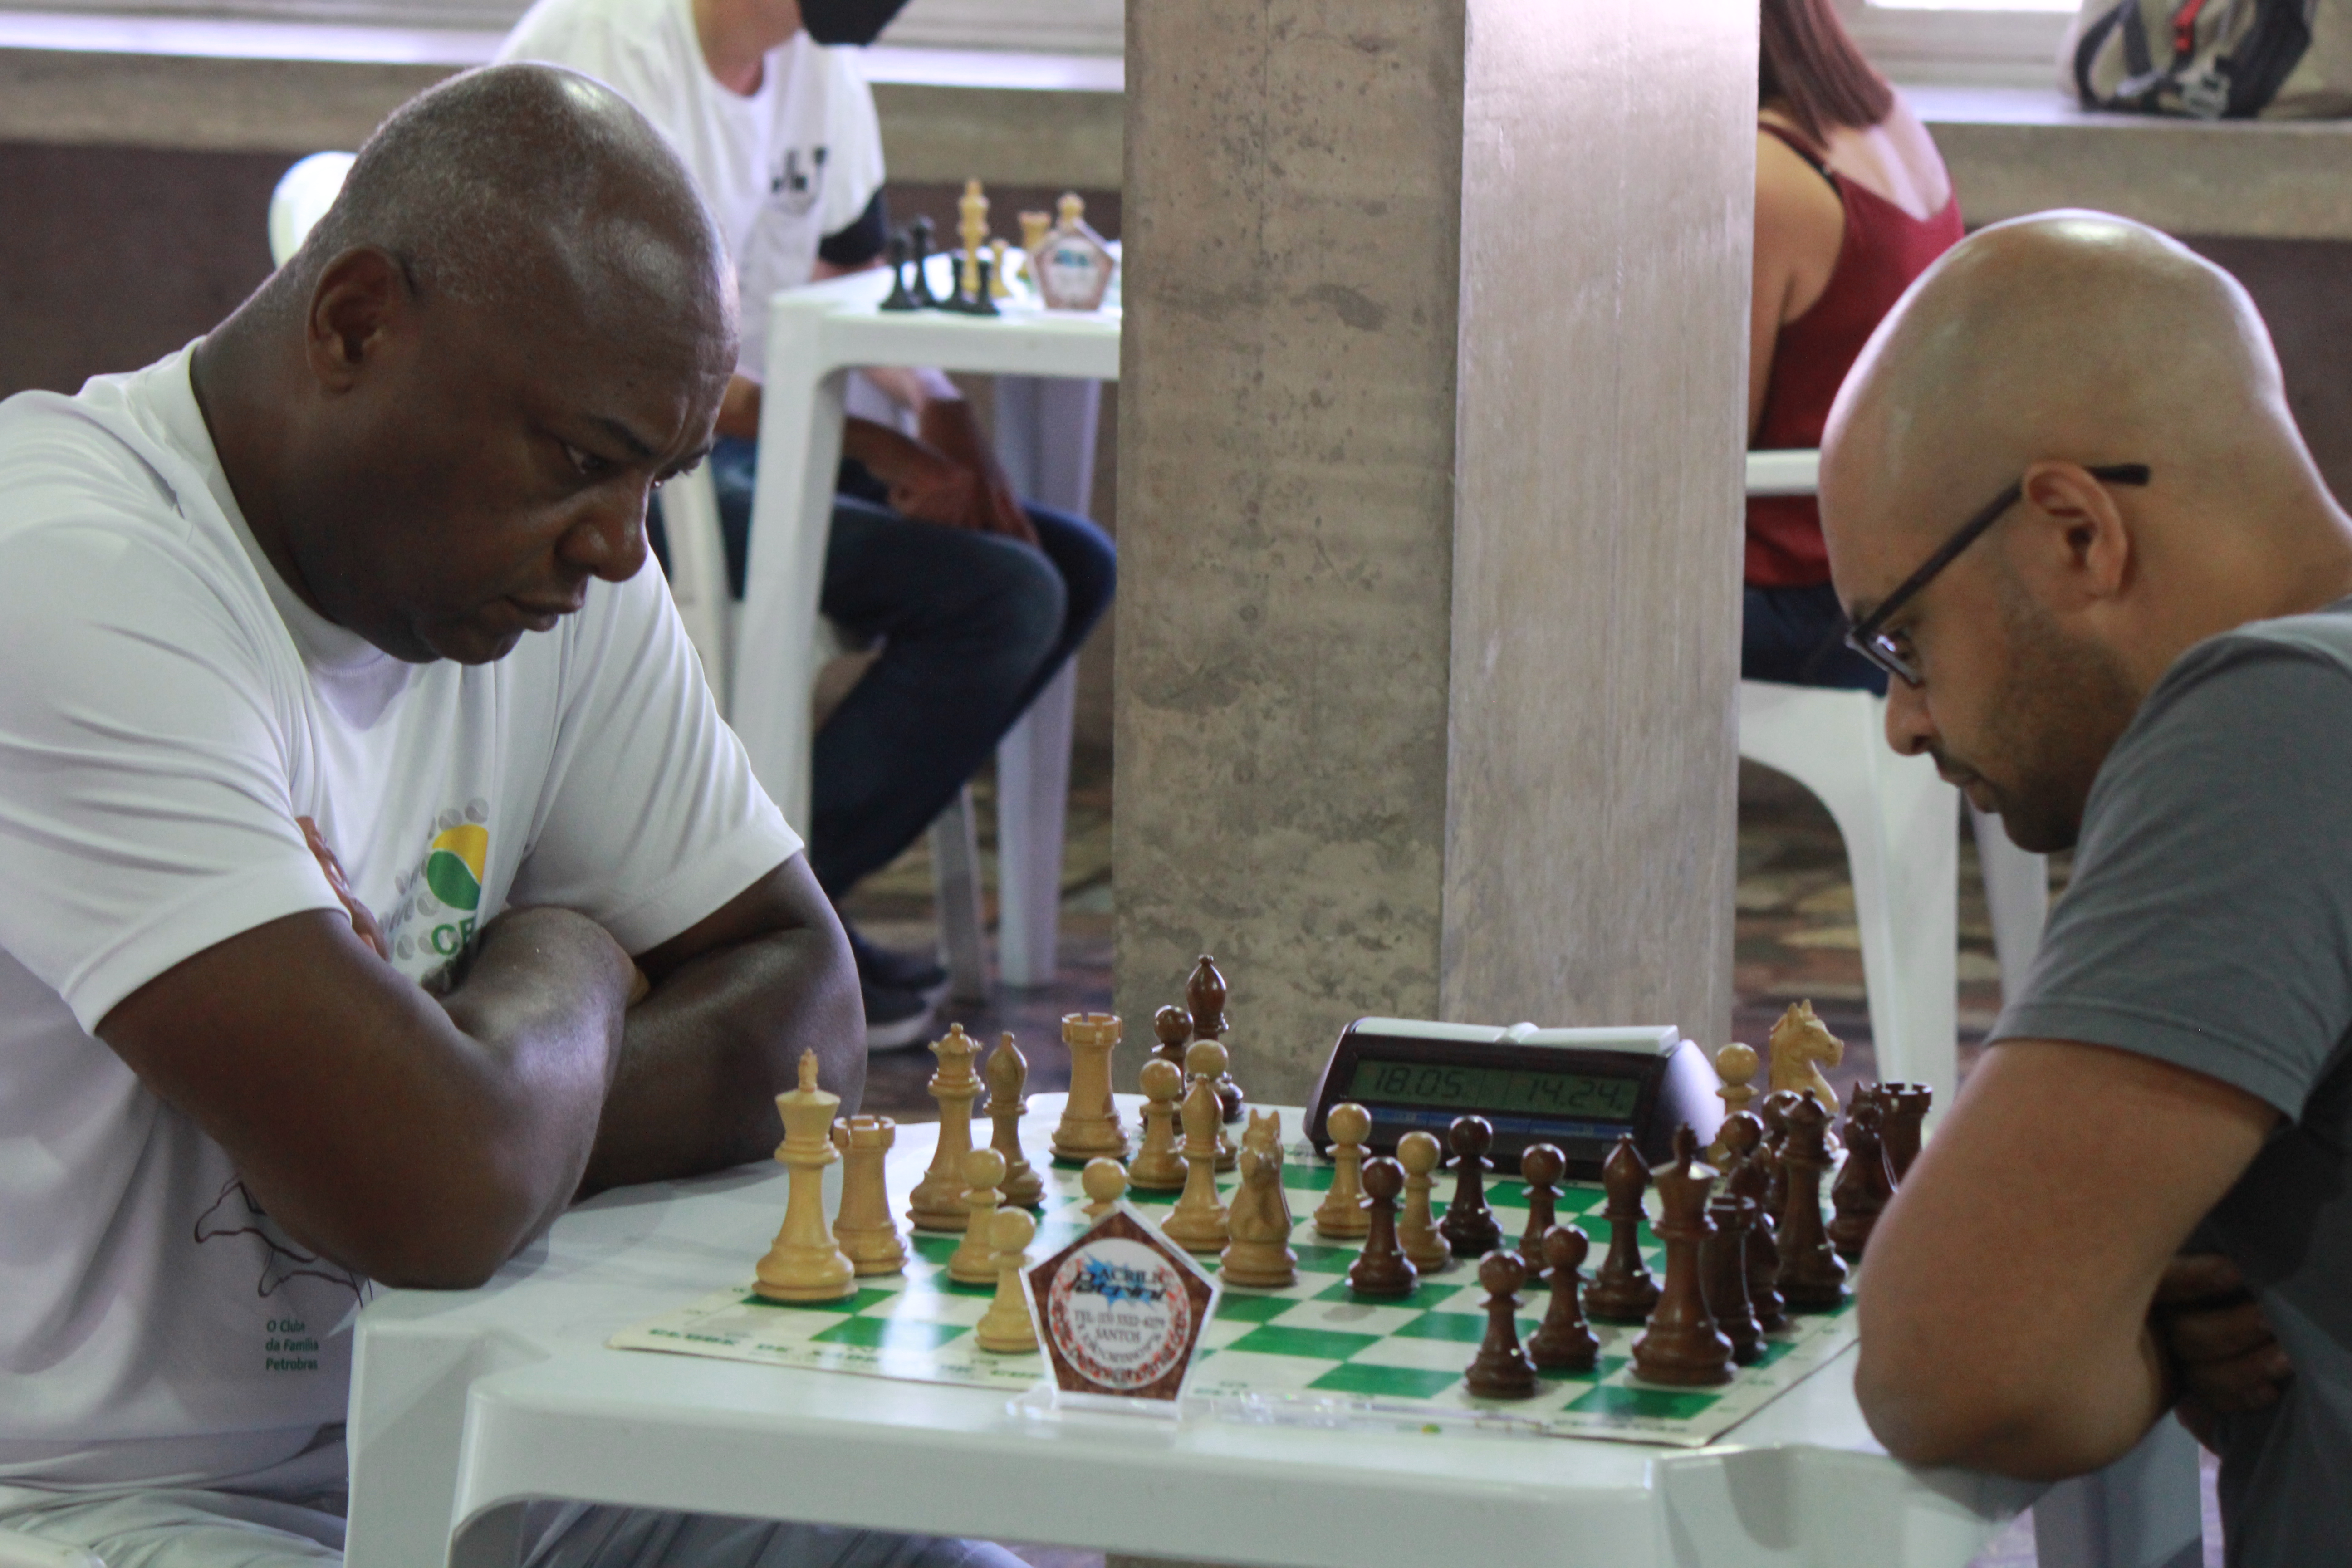 Sindipetro-LP, Cepe Santos/SP e Clube de Xadrez de Cubatão promove torneio  de xadrez neste sábado